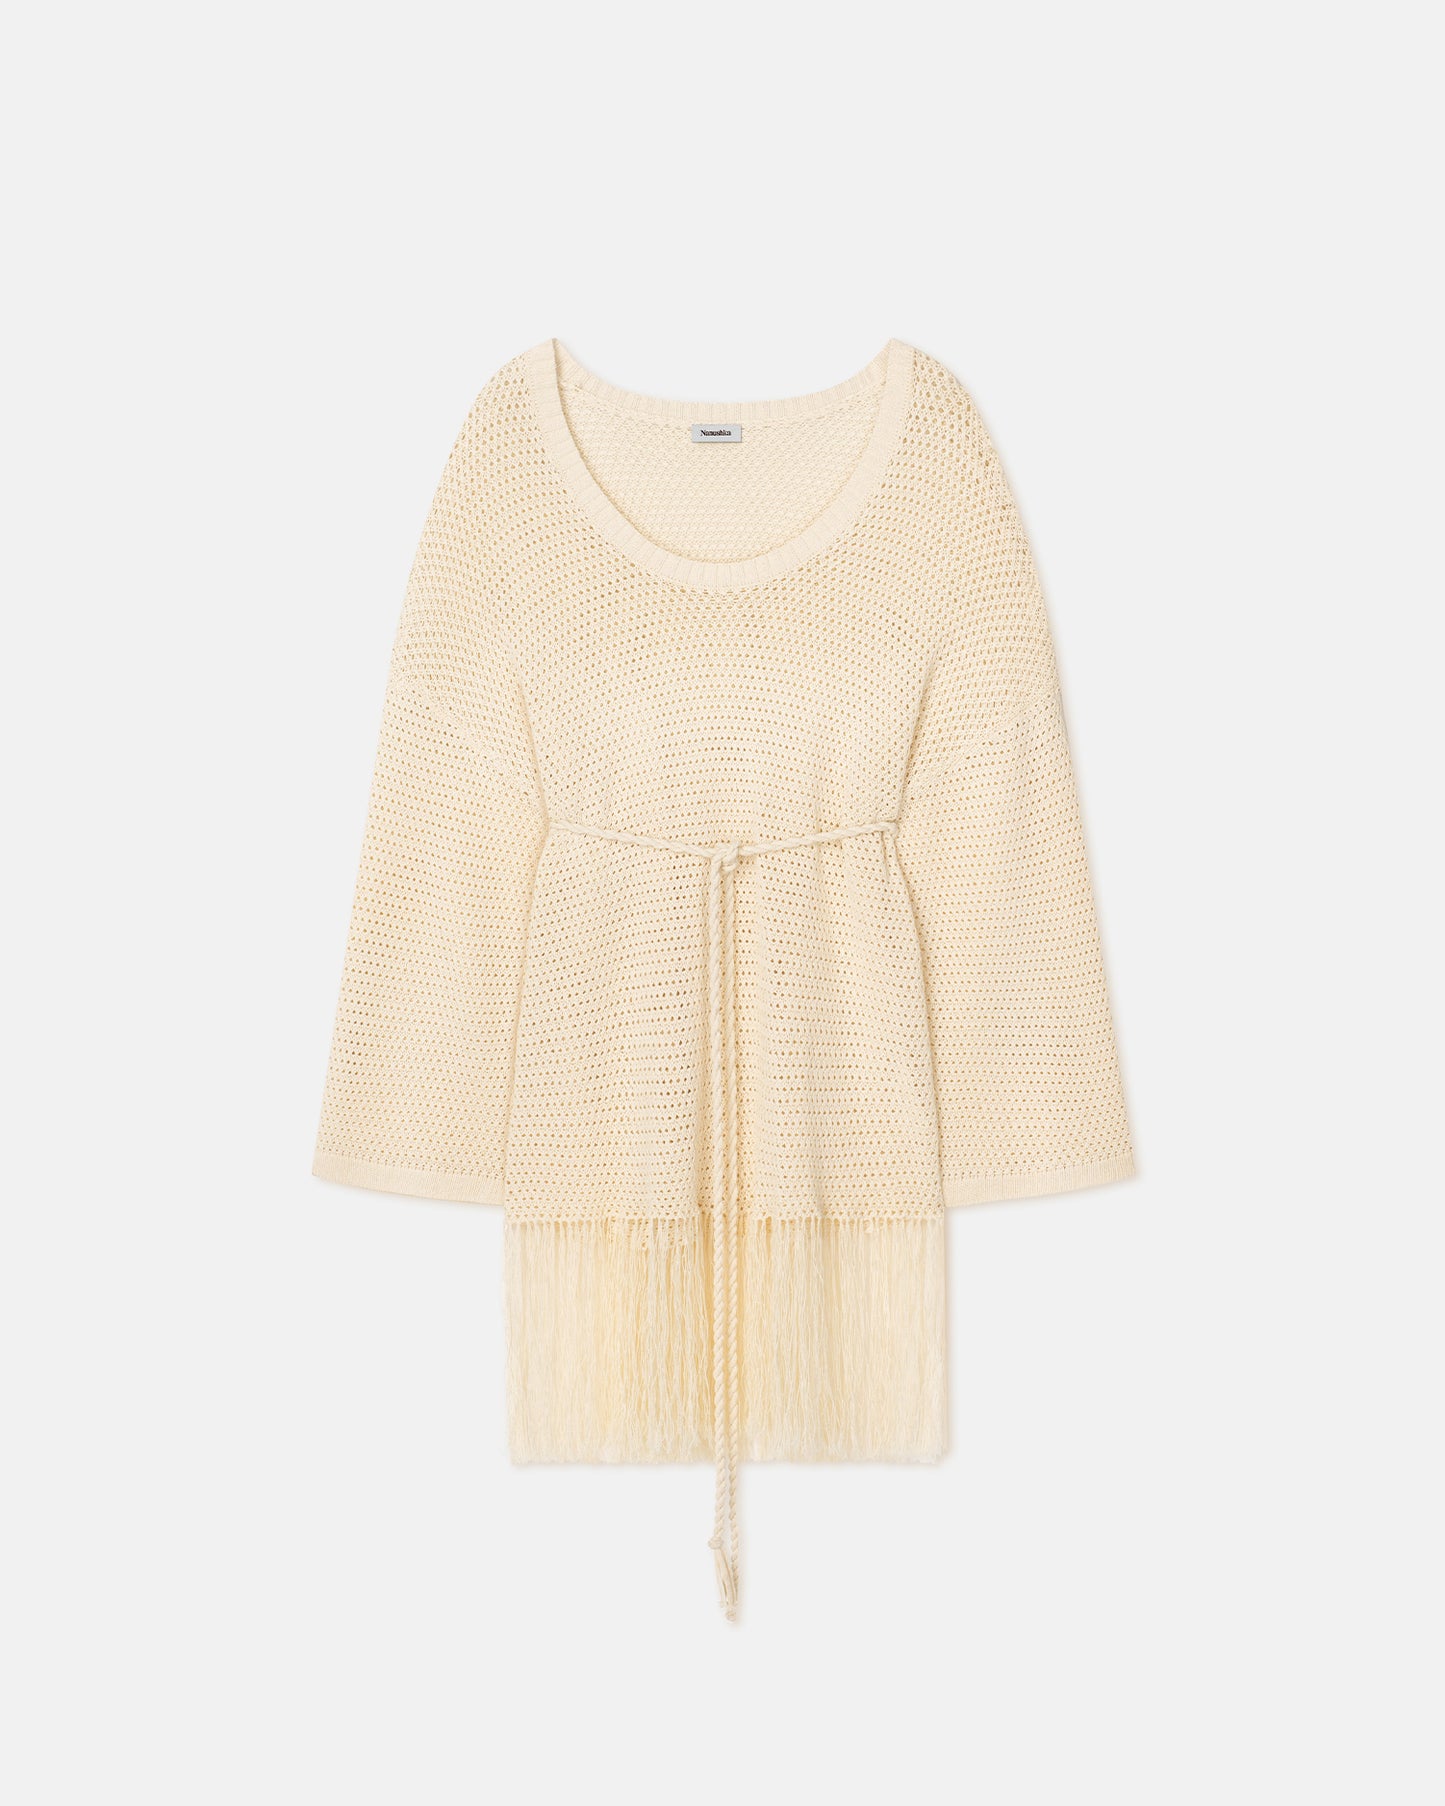 Carianne - Fringed Crochet Mini Dress - Creme